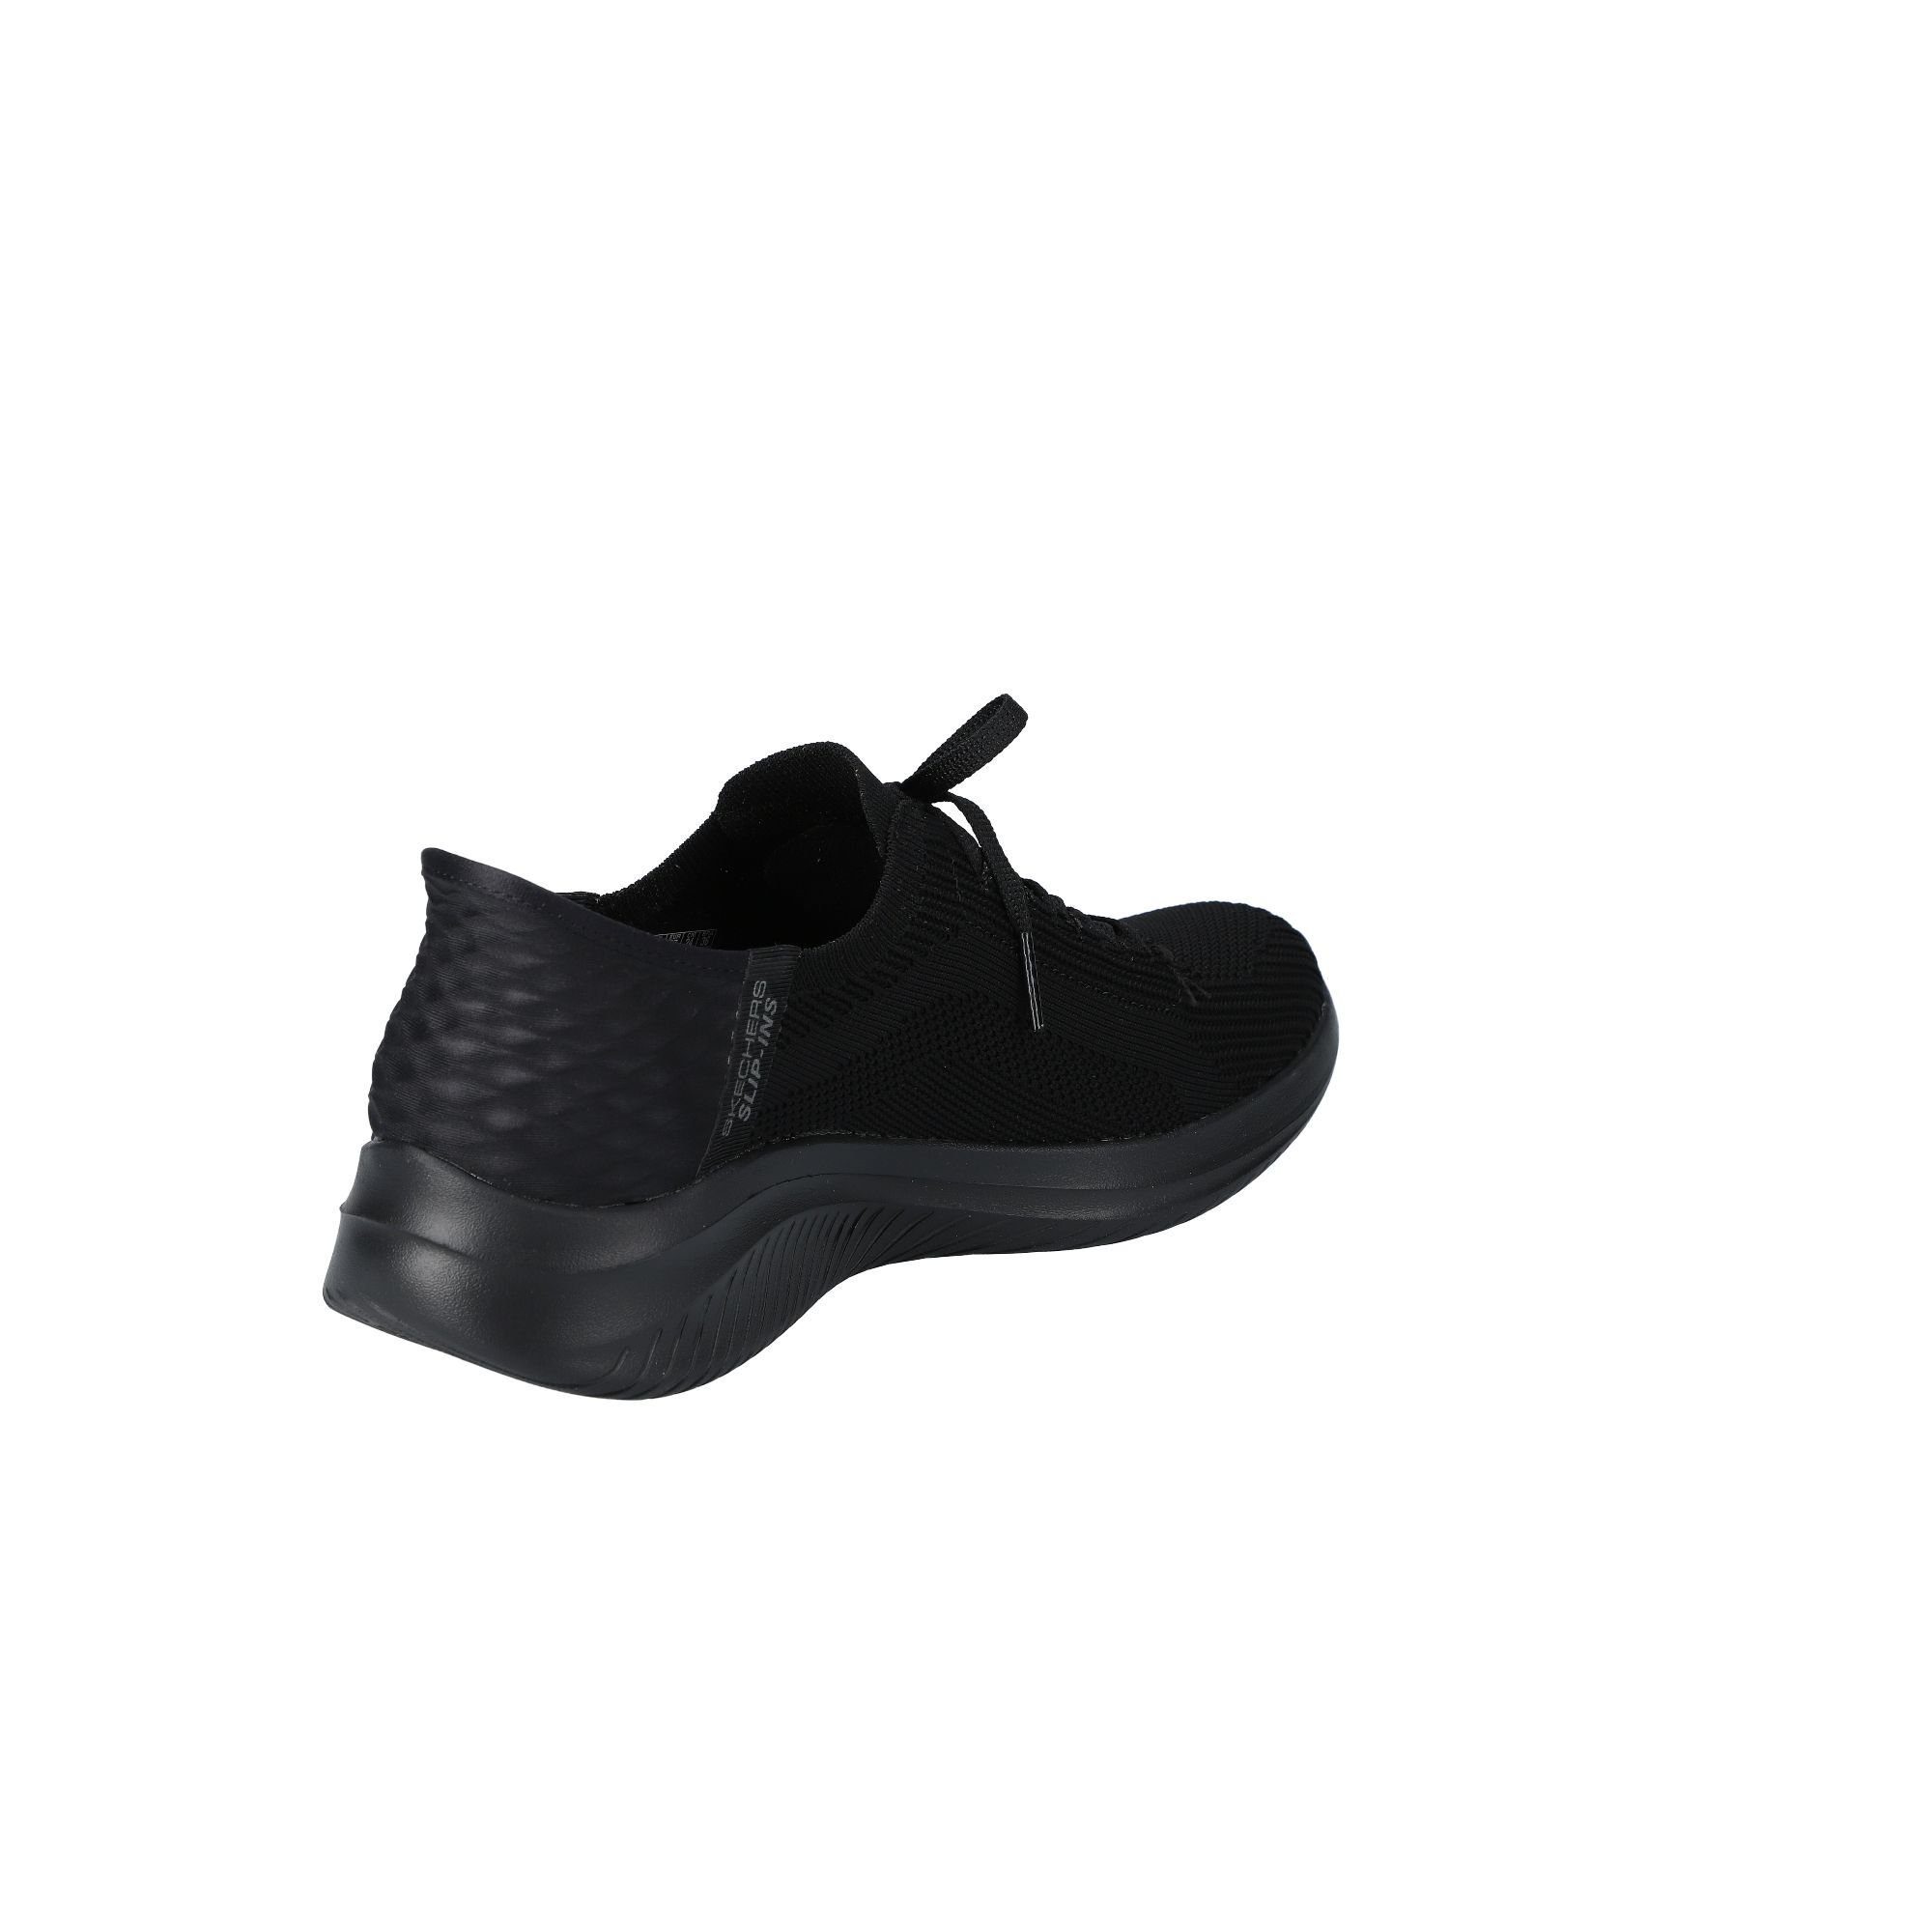 PATH Sneaker black 3.0 BRILLIANT ULTRA - Skechers FLEX